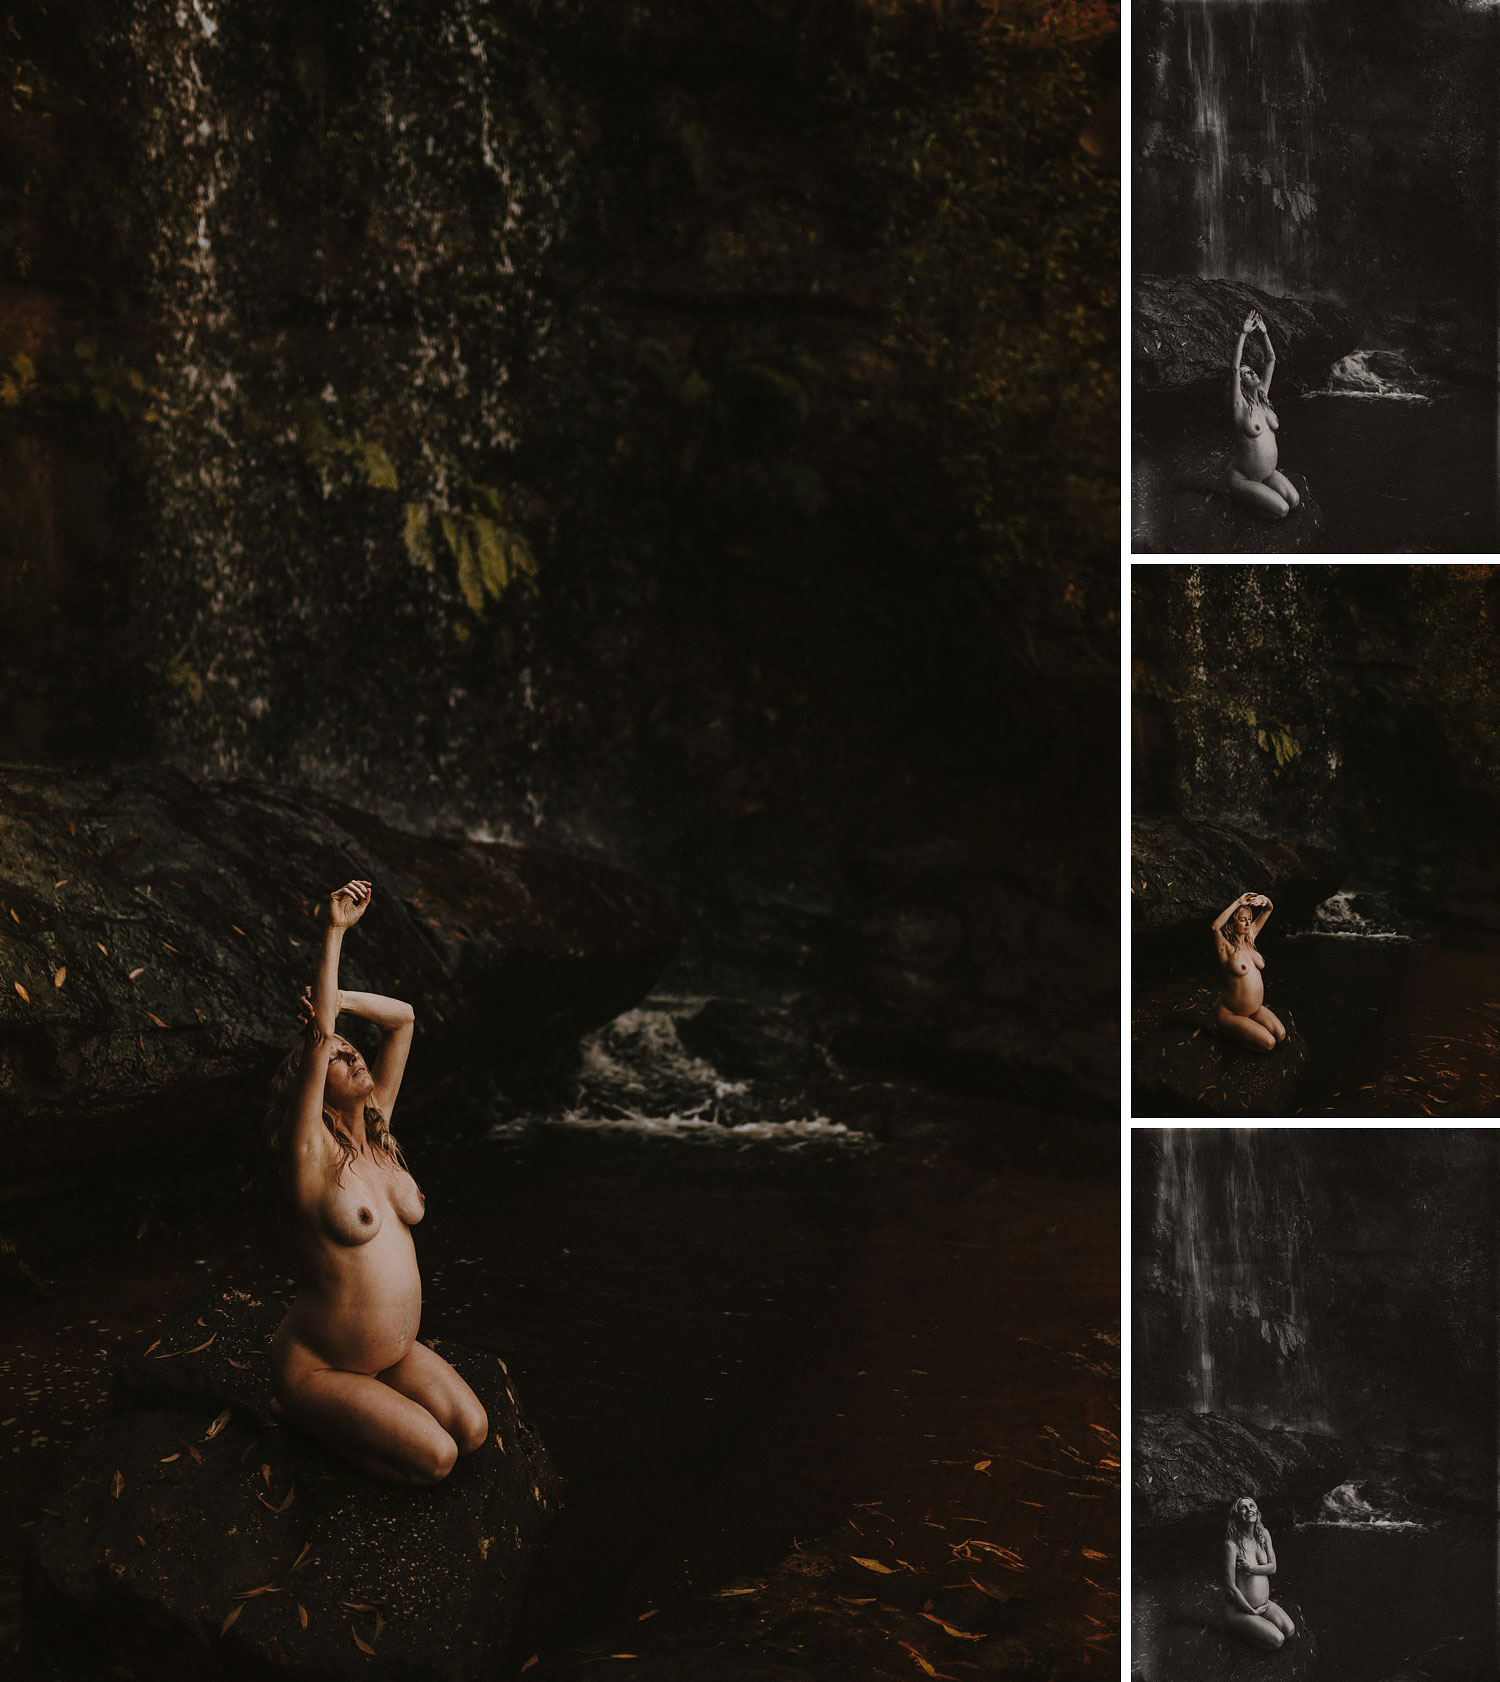 Waterfall-location-for-maternity-photos-sydney